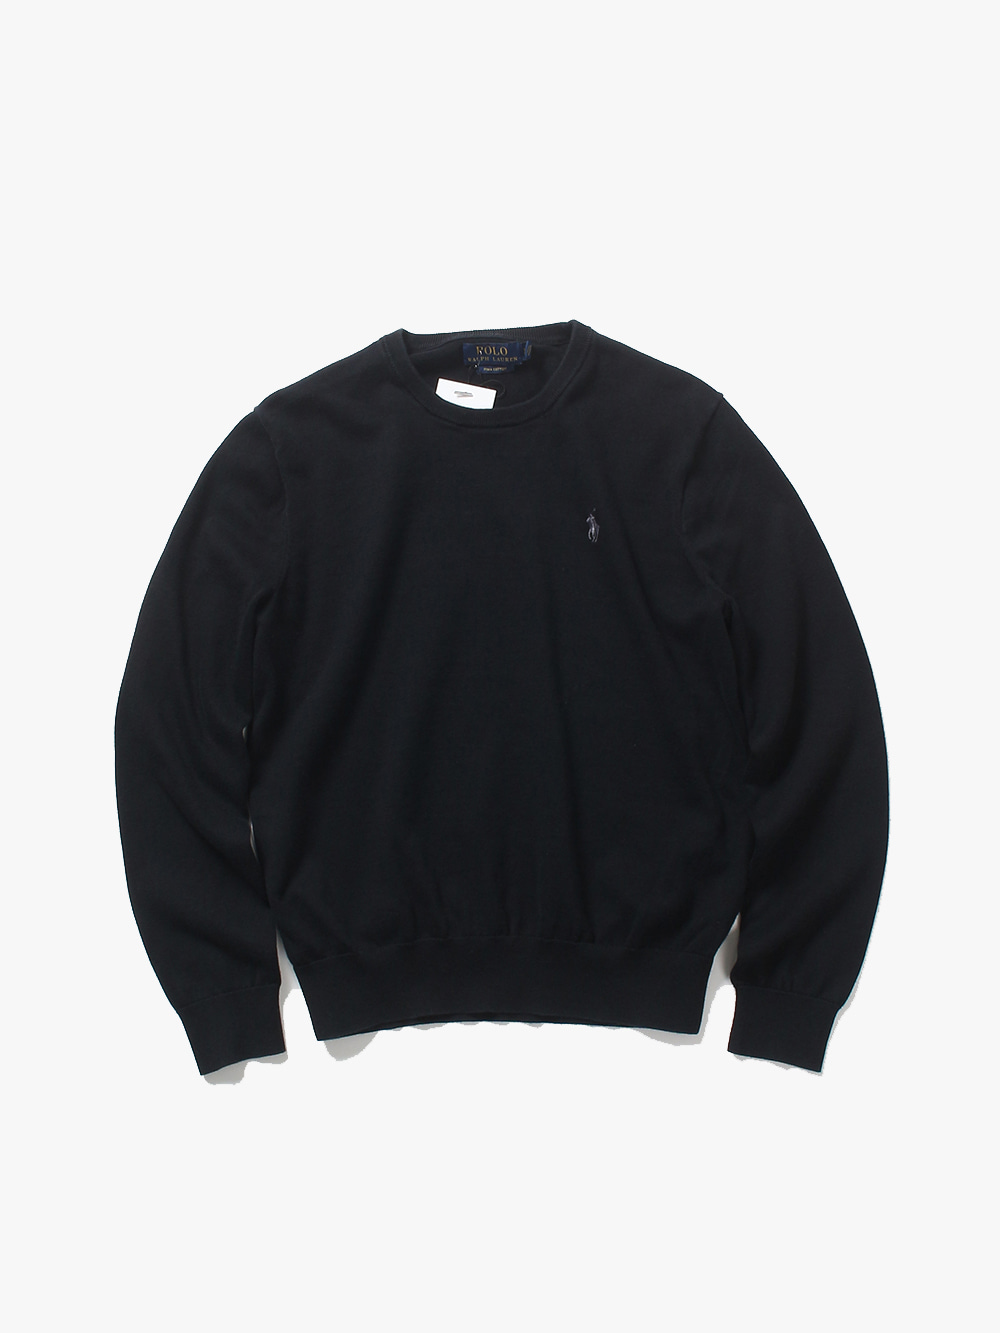 [ S ] Polo Ralph Lauren Sweater (6453)